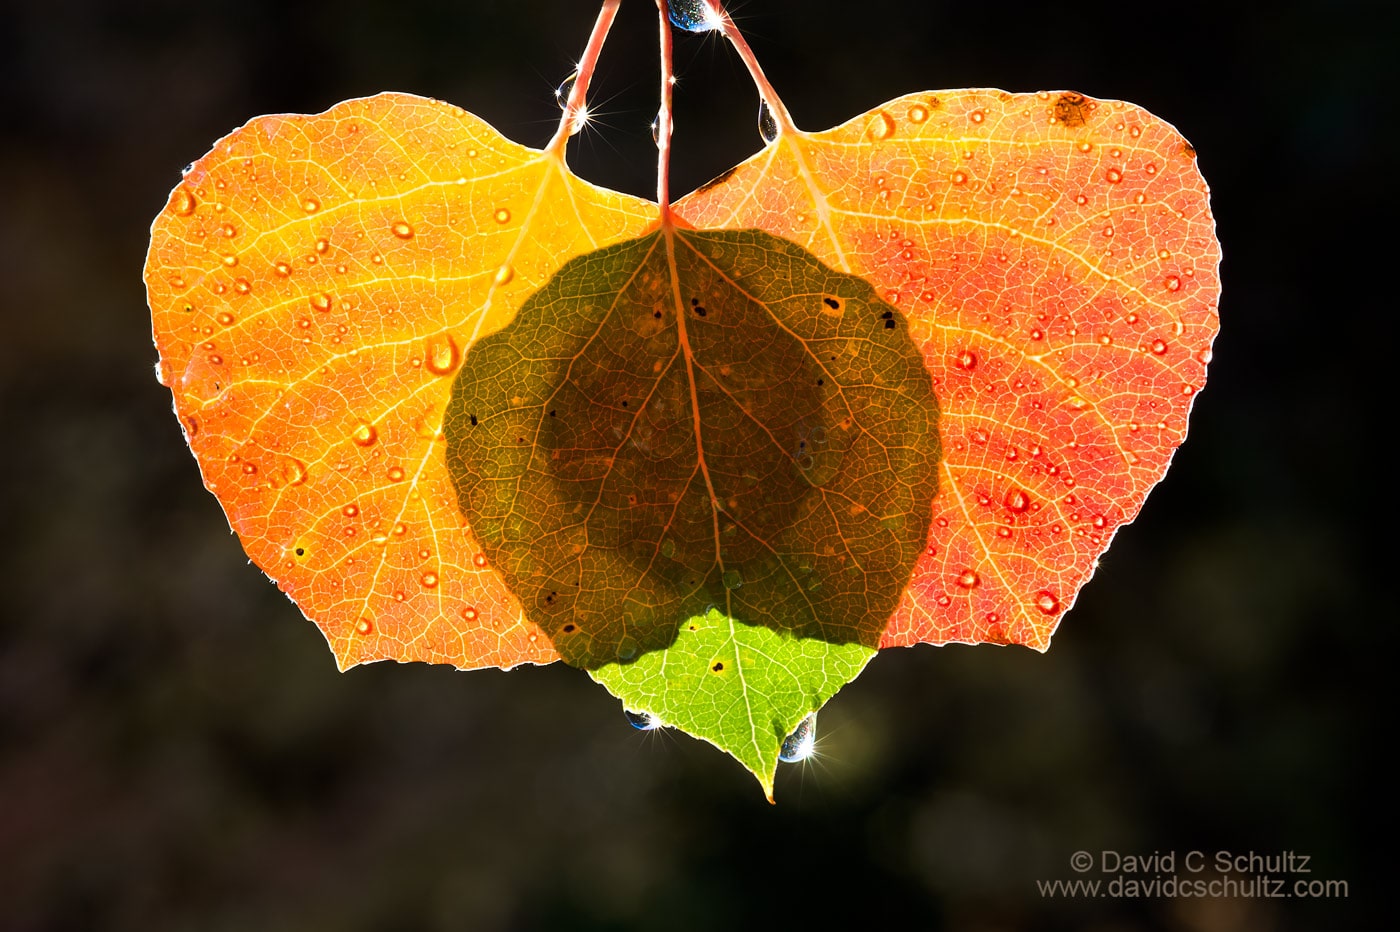 Back-lit aspen leaves in the fall - Image #191-142